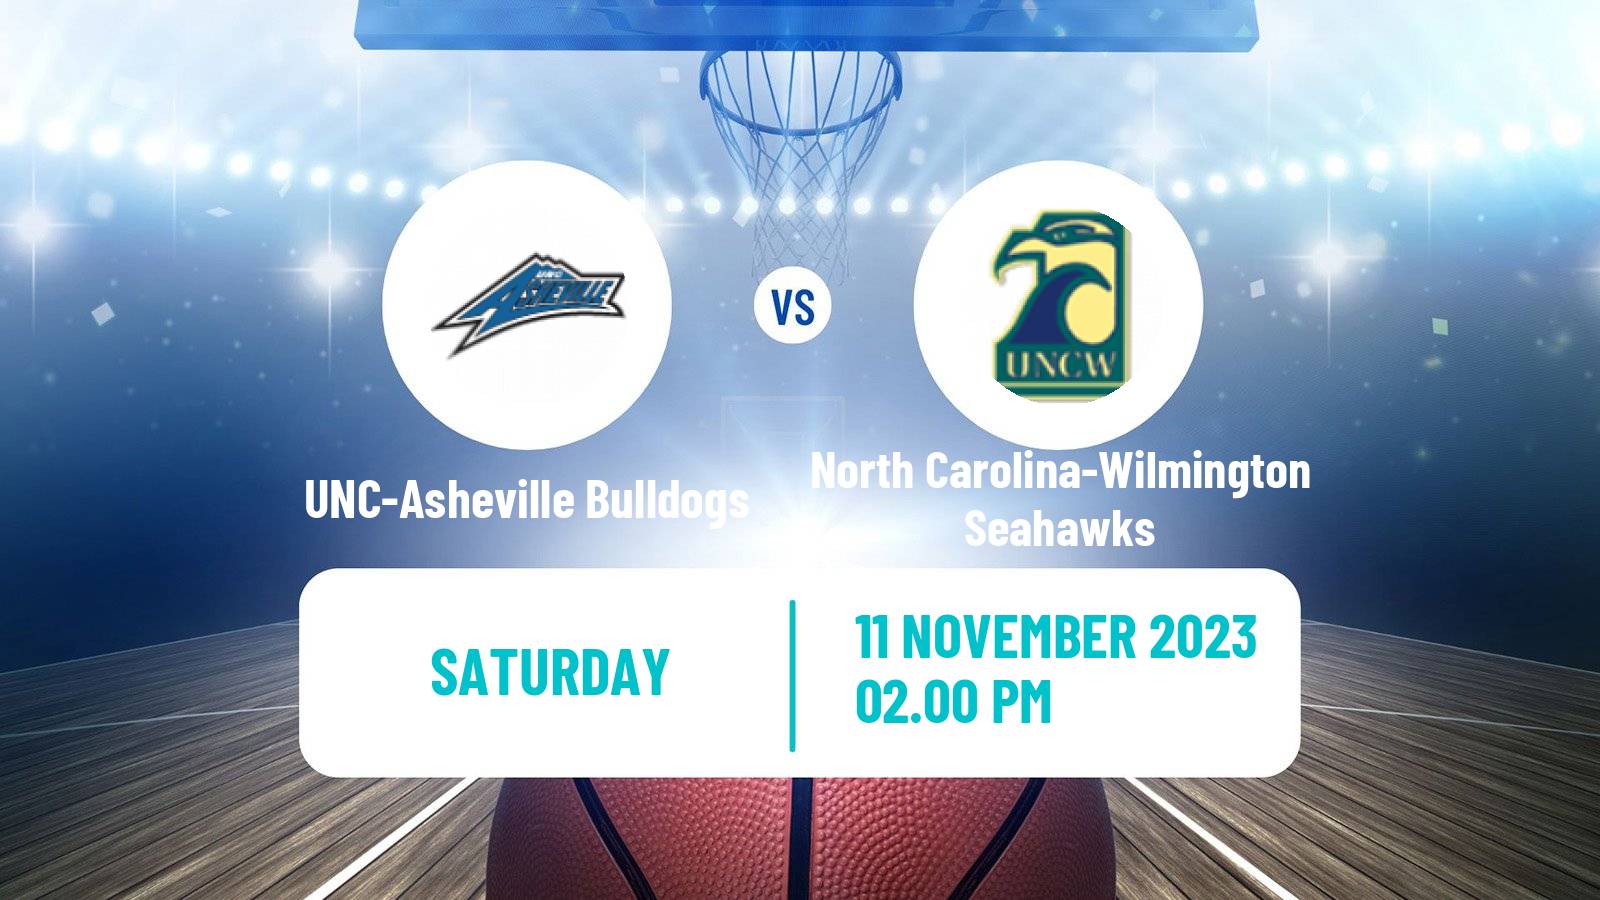 Basketball NCAA College Basketball UNC-Asheville Bulldogs - North Carolina-Wilmington Seahawks